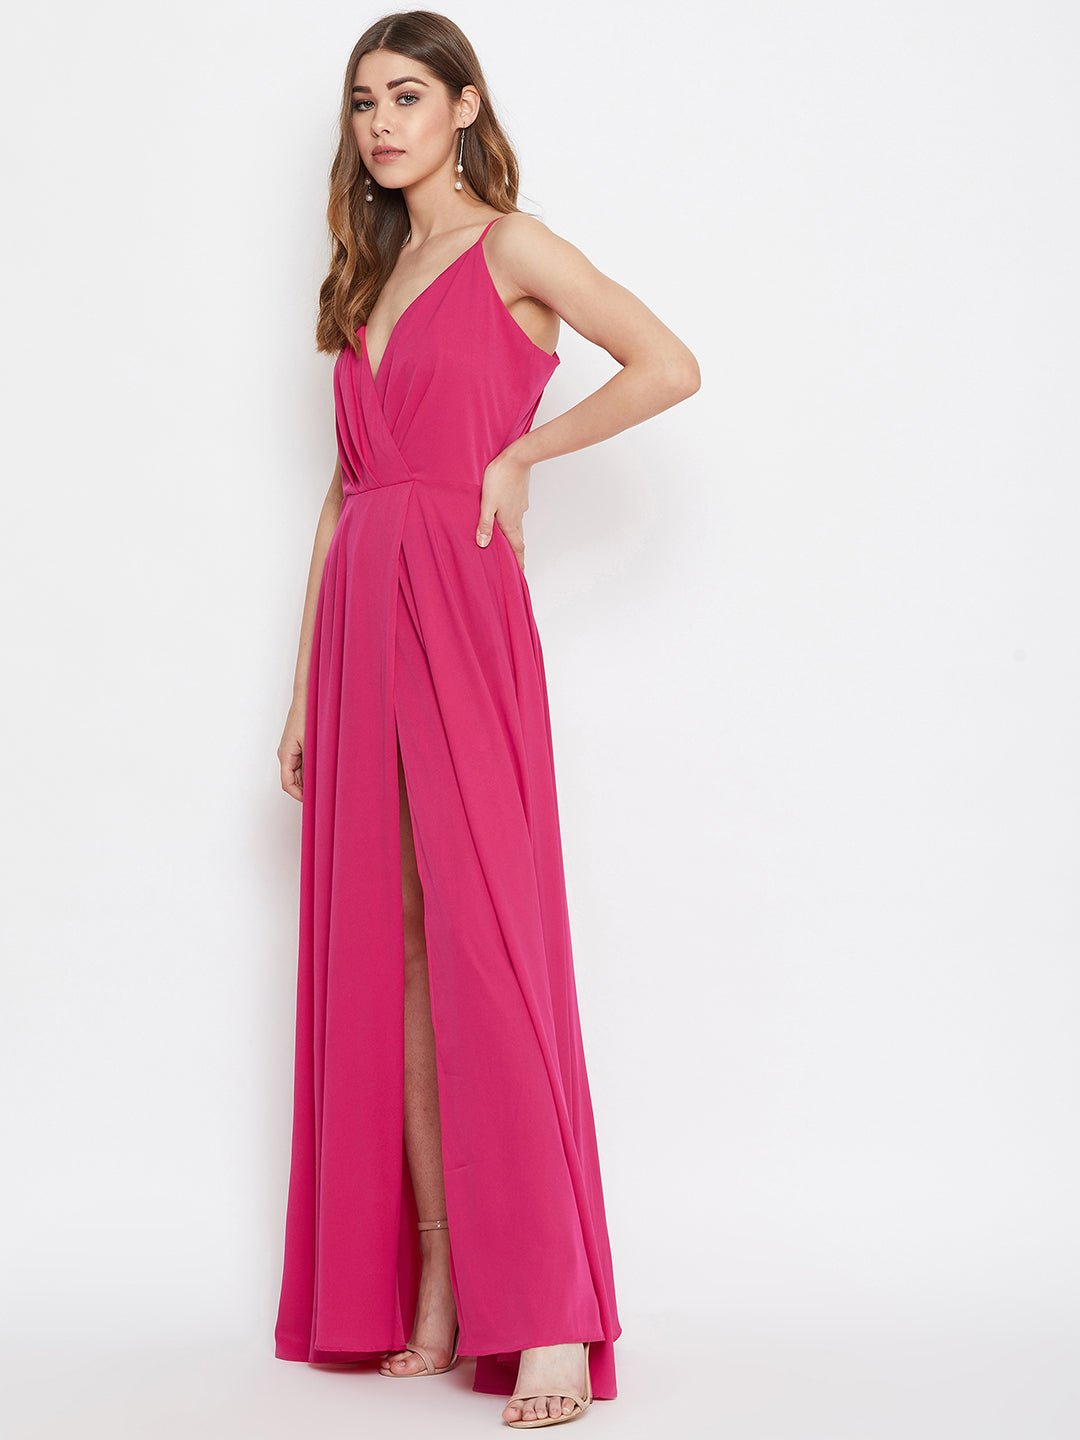 Folk Republic Women Solid Pink V-Neck Sleeveless Pleated Maxi Dress - #folk republic#